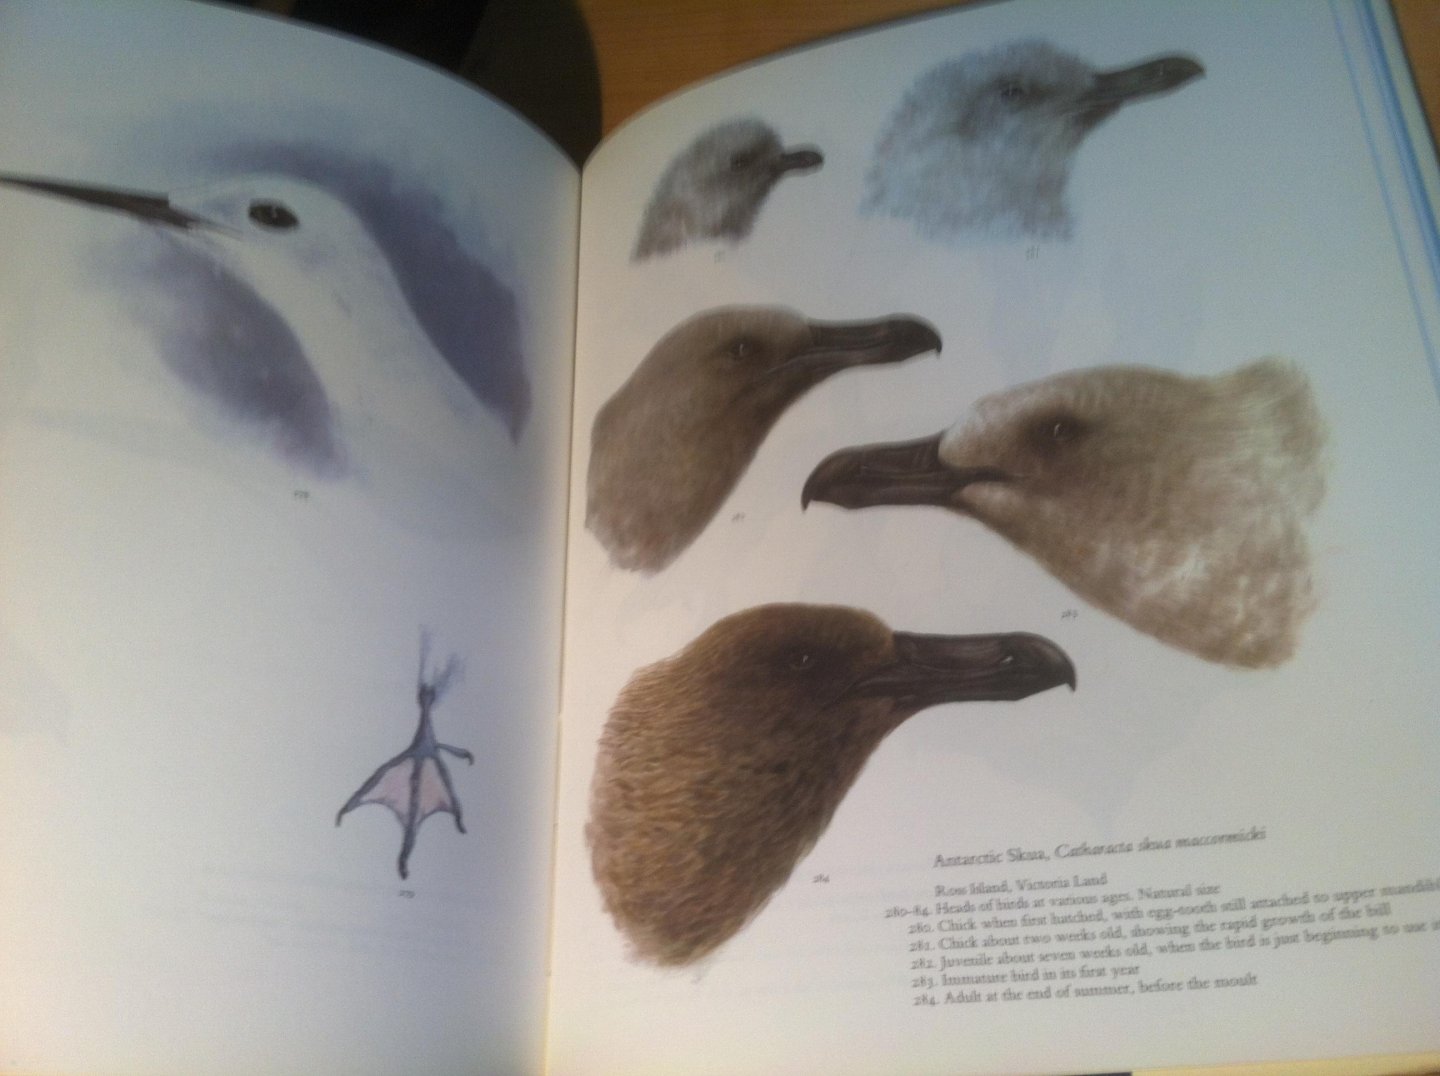 Wilson, Edward & Brian Roberts (ed) - Birds of the Antarctic